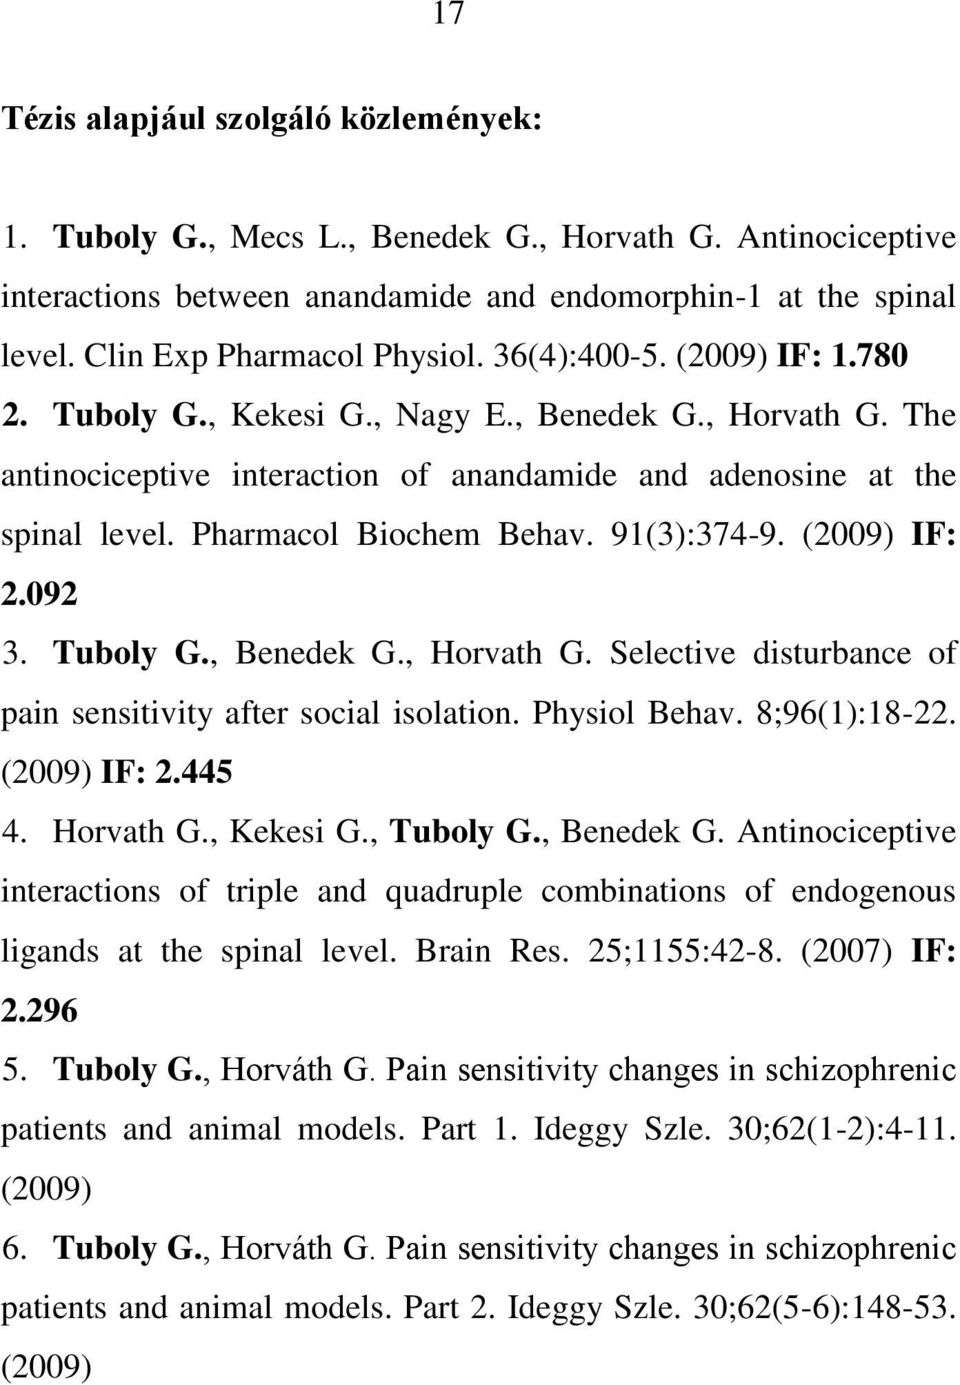 91(3):374-9. (2009) IF: 2.092 3. Tuboly G., Benedek G., Horvath G. Selective disturbance of pain sensitivity after social isolation. Physiol Behav. 8;96(1):18-22. (2009) IF: 2.445 4. Horvath G., Kekesi G.